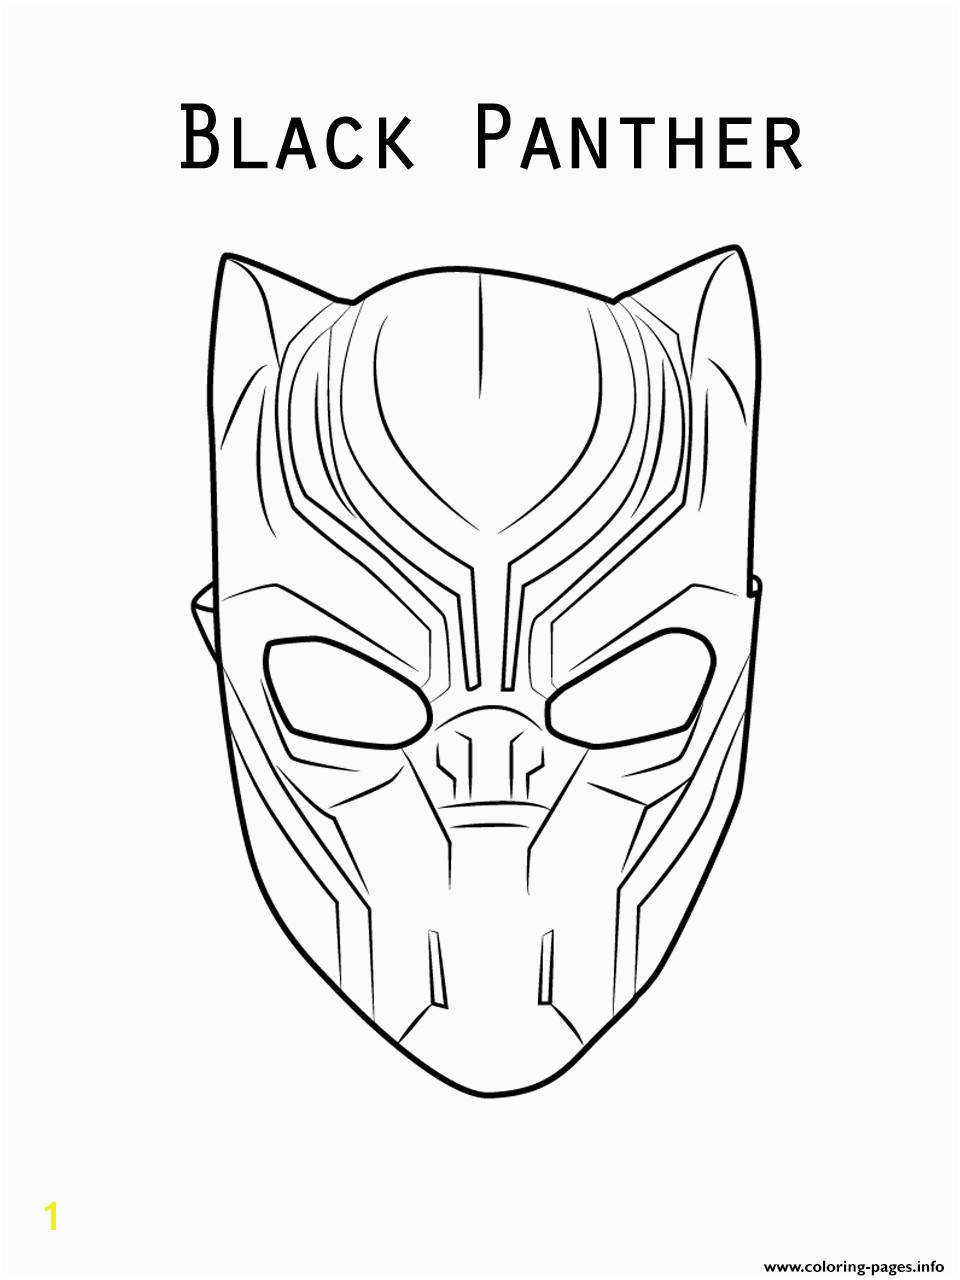 Black Panther Superhero Coloring Pages Black Panther Superhero Coloring Pages to Print at Marvel Mapleton